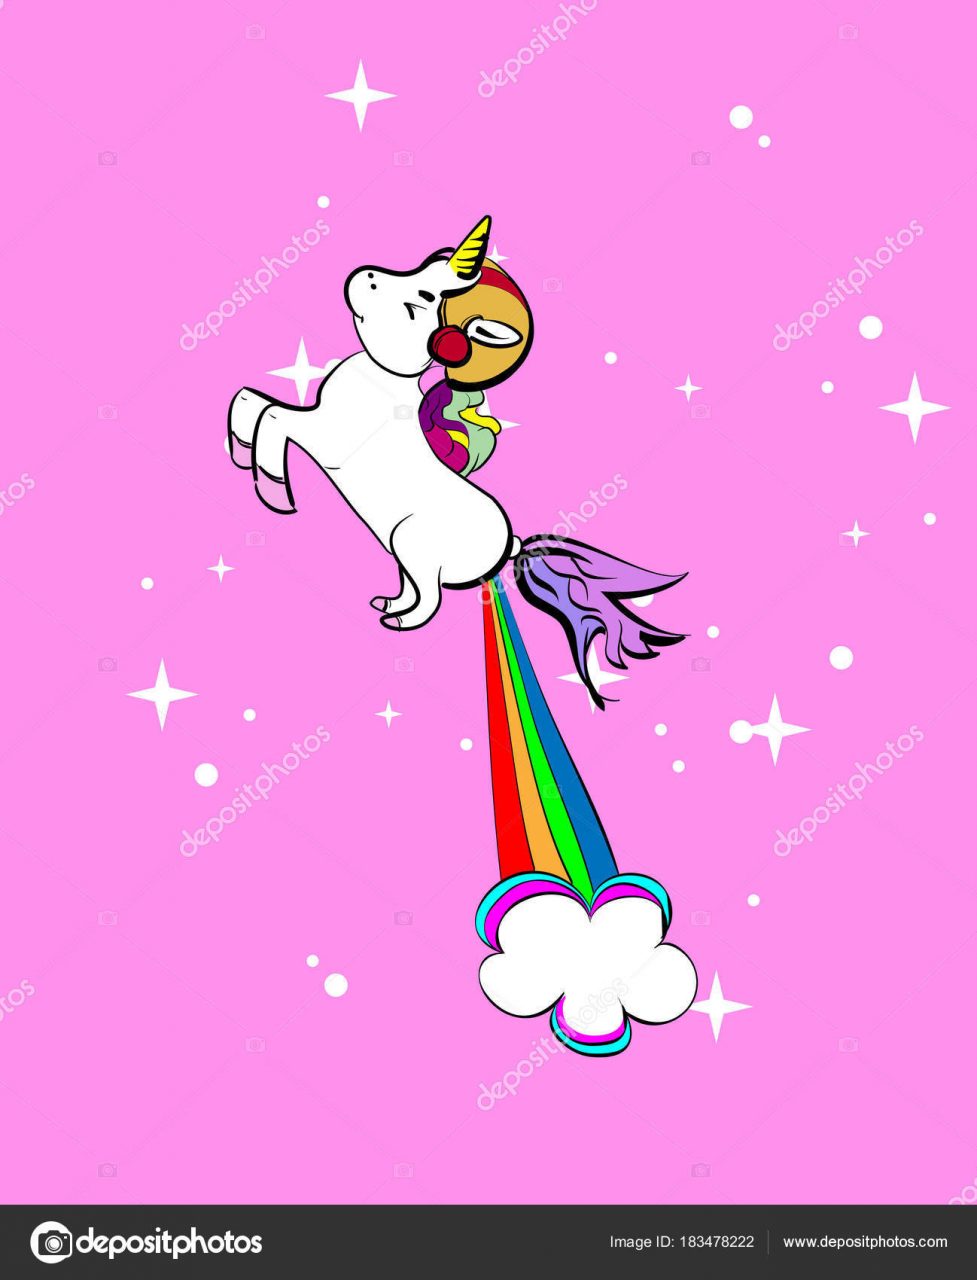 depositphotos 183478222 stock illustration cute fat unicorn farting rainbow